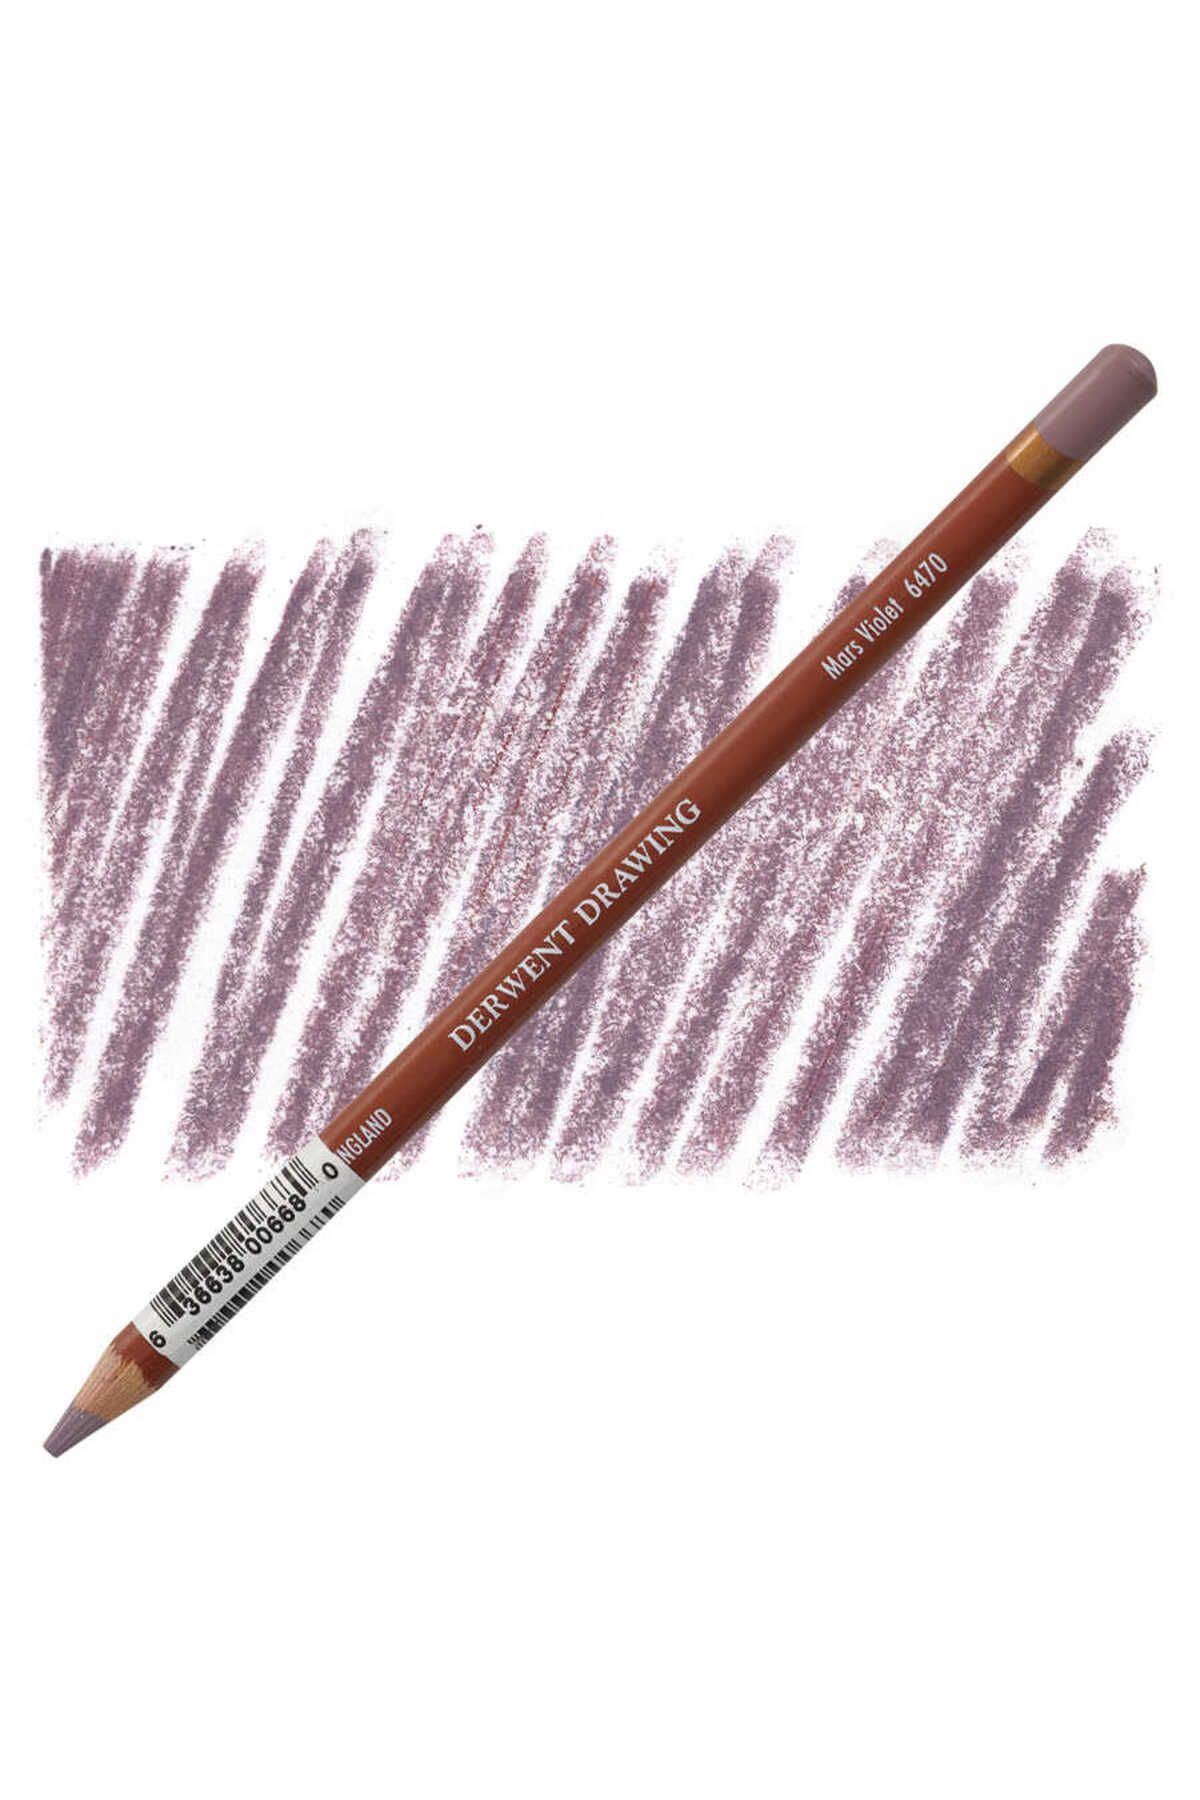 Derwent Drawing Yağlı Pastel Kalem - 6470 Mars Violet